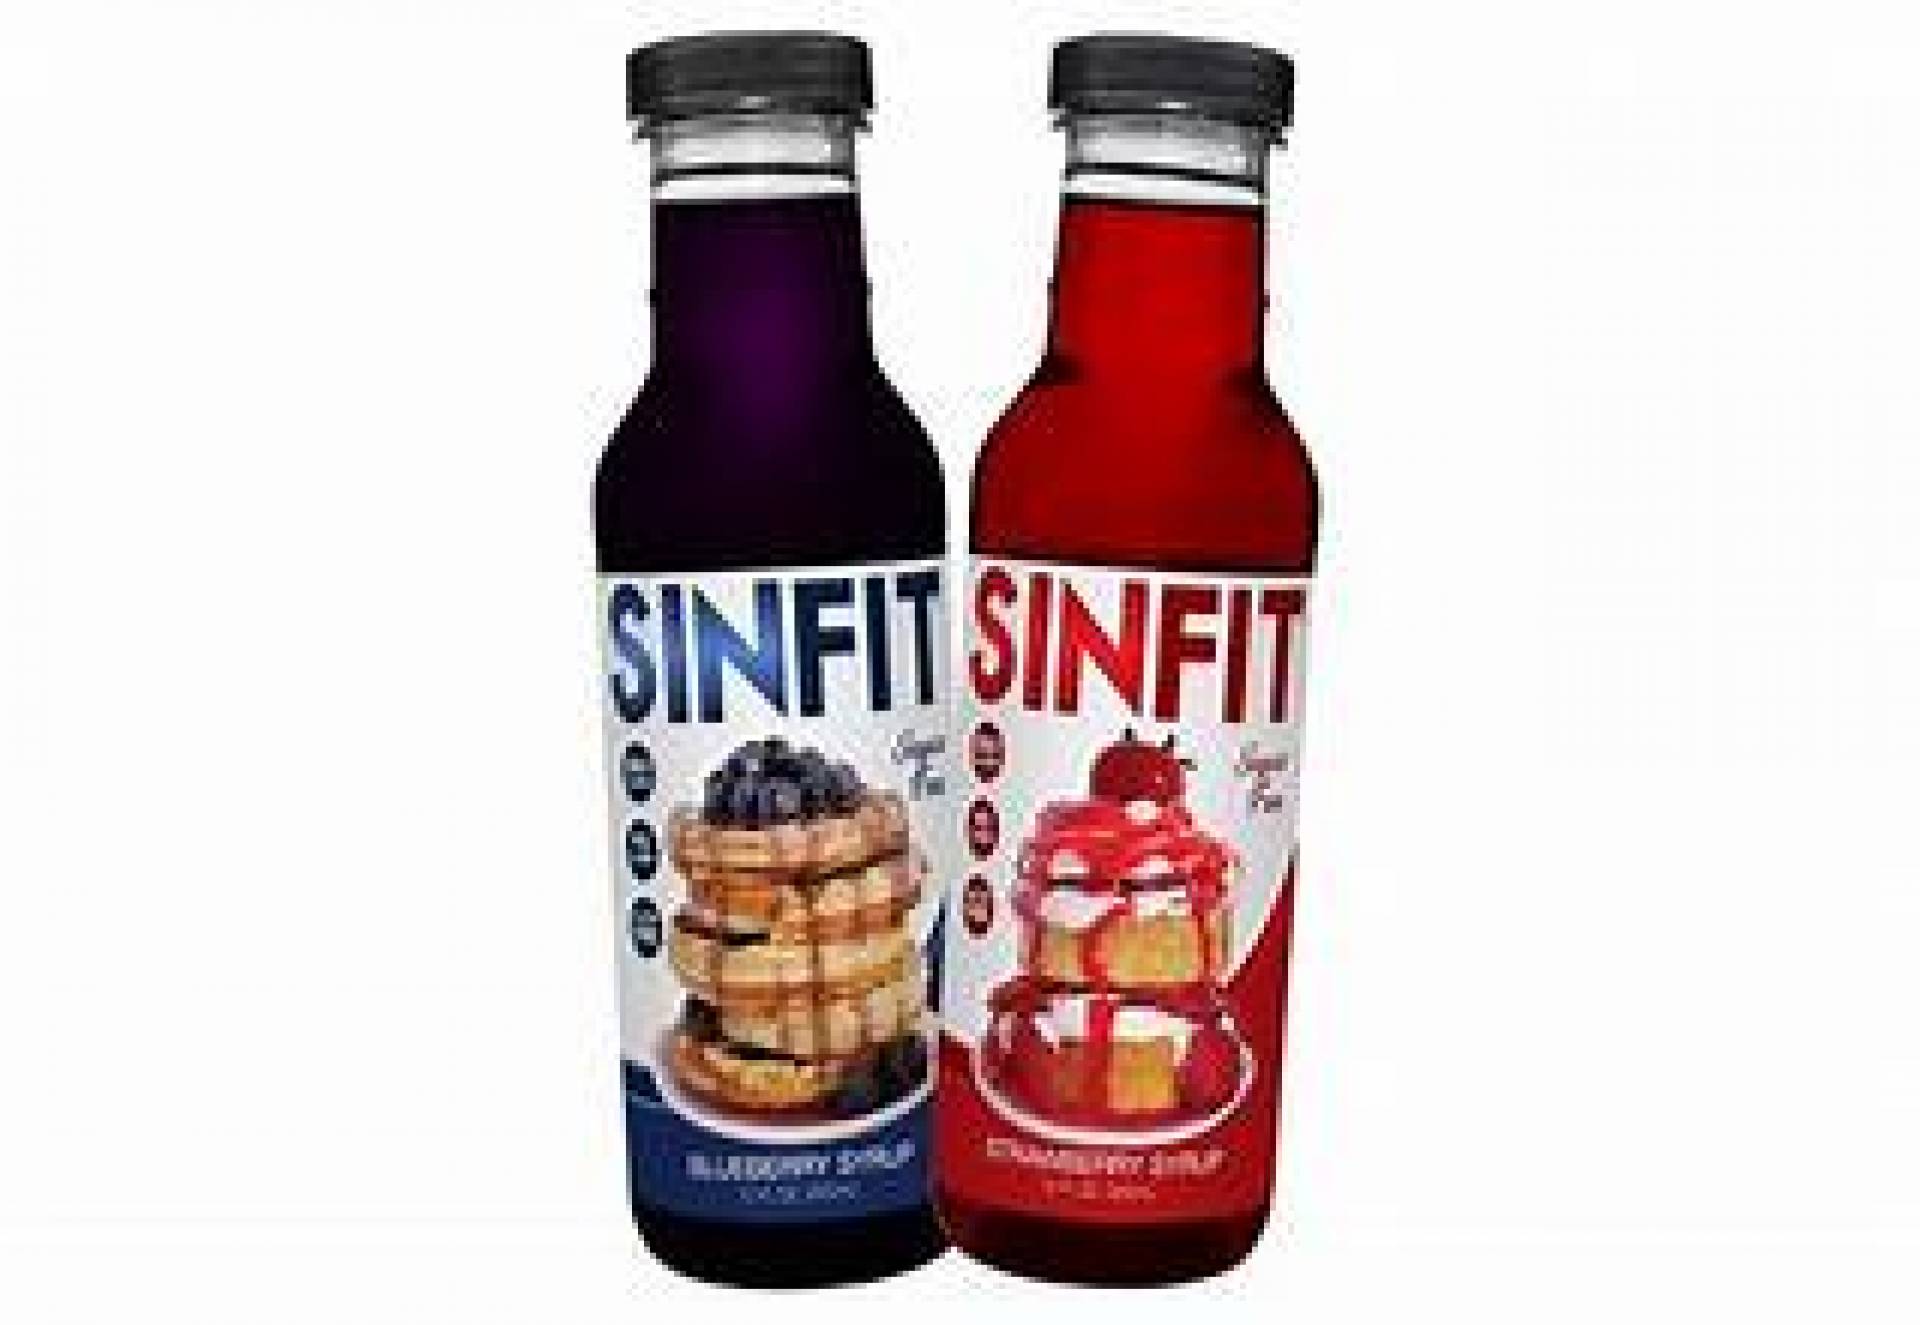 Sinfit Syrups - $6.99